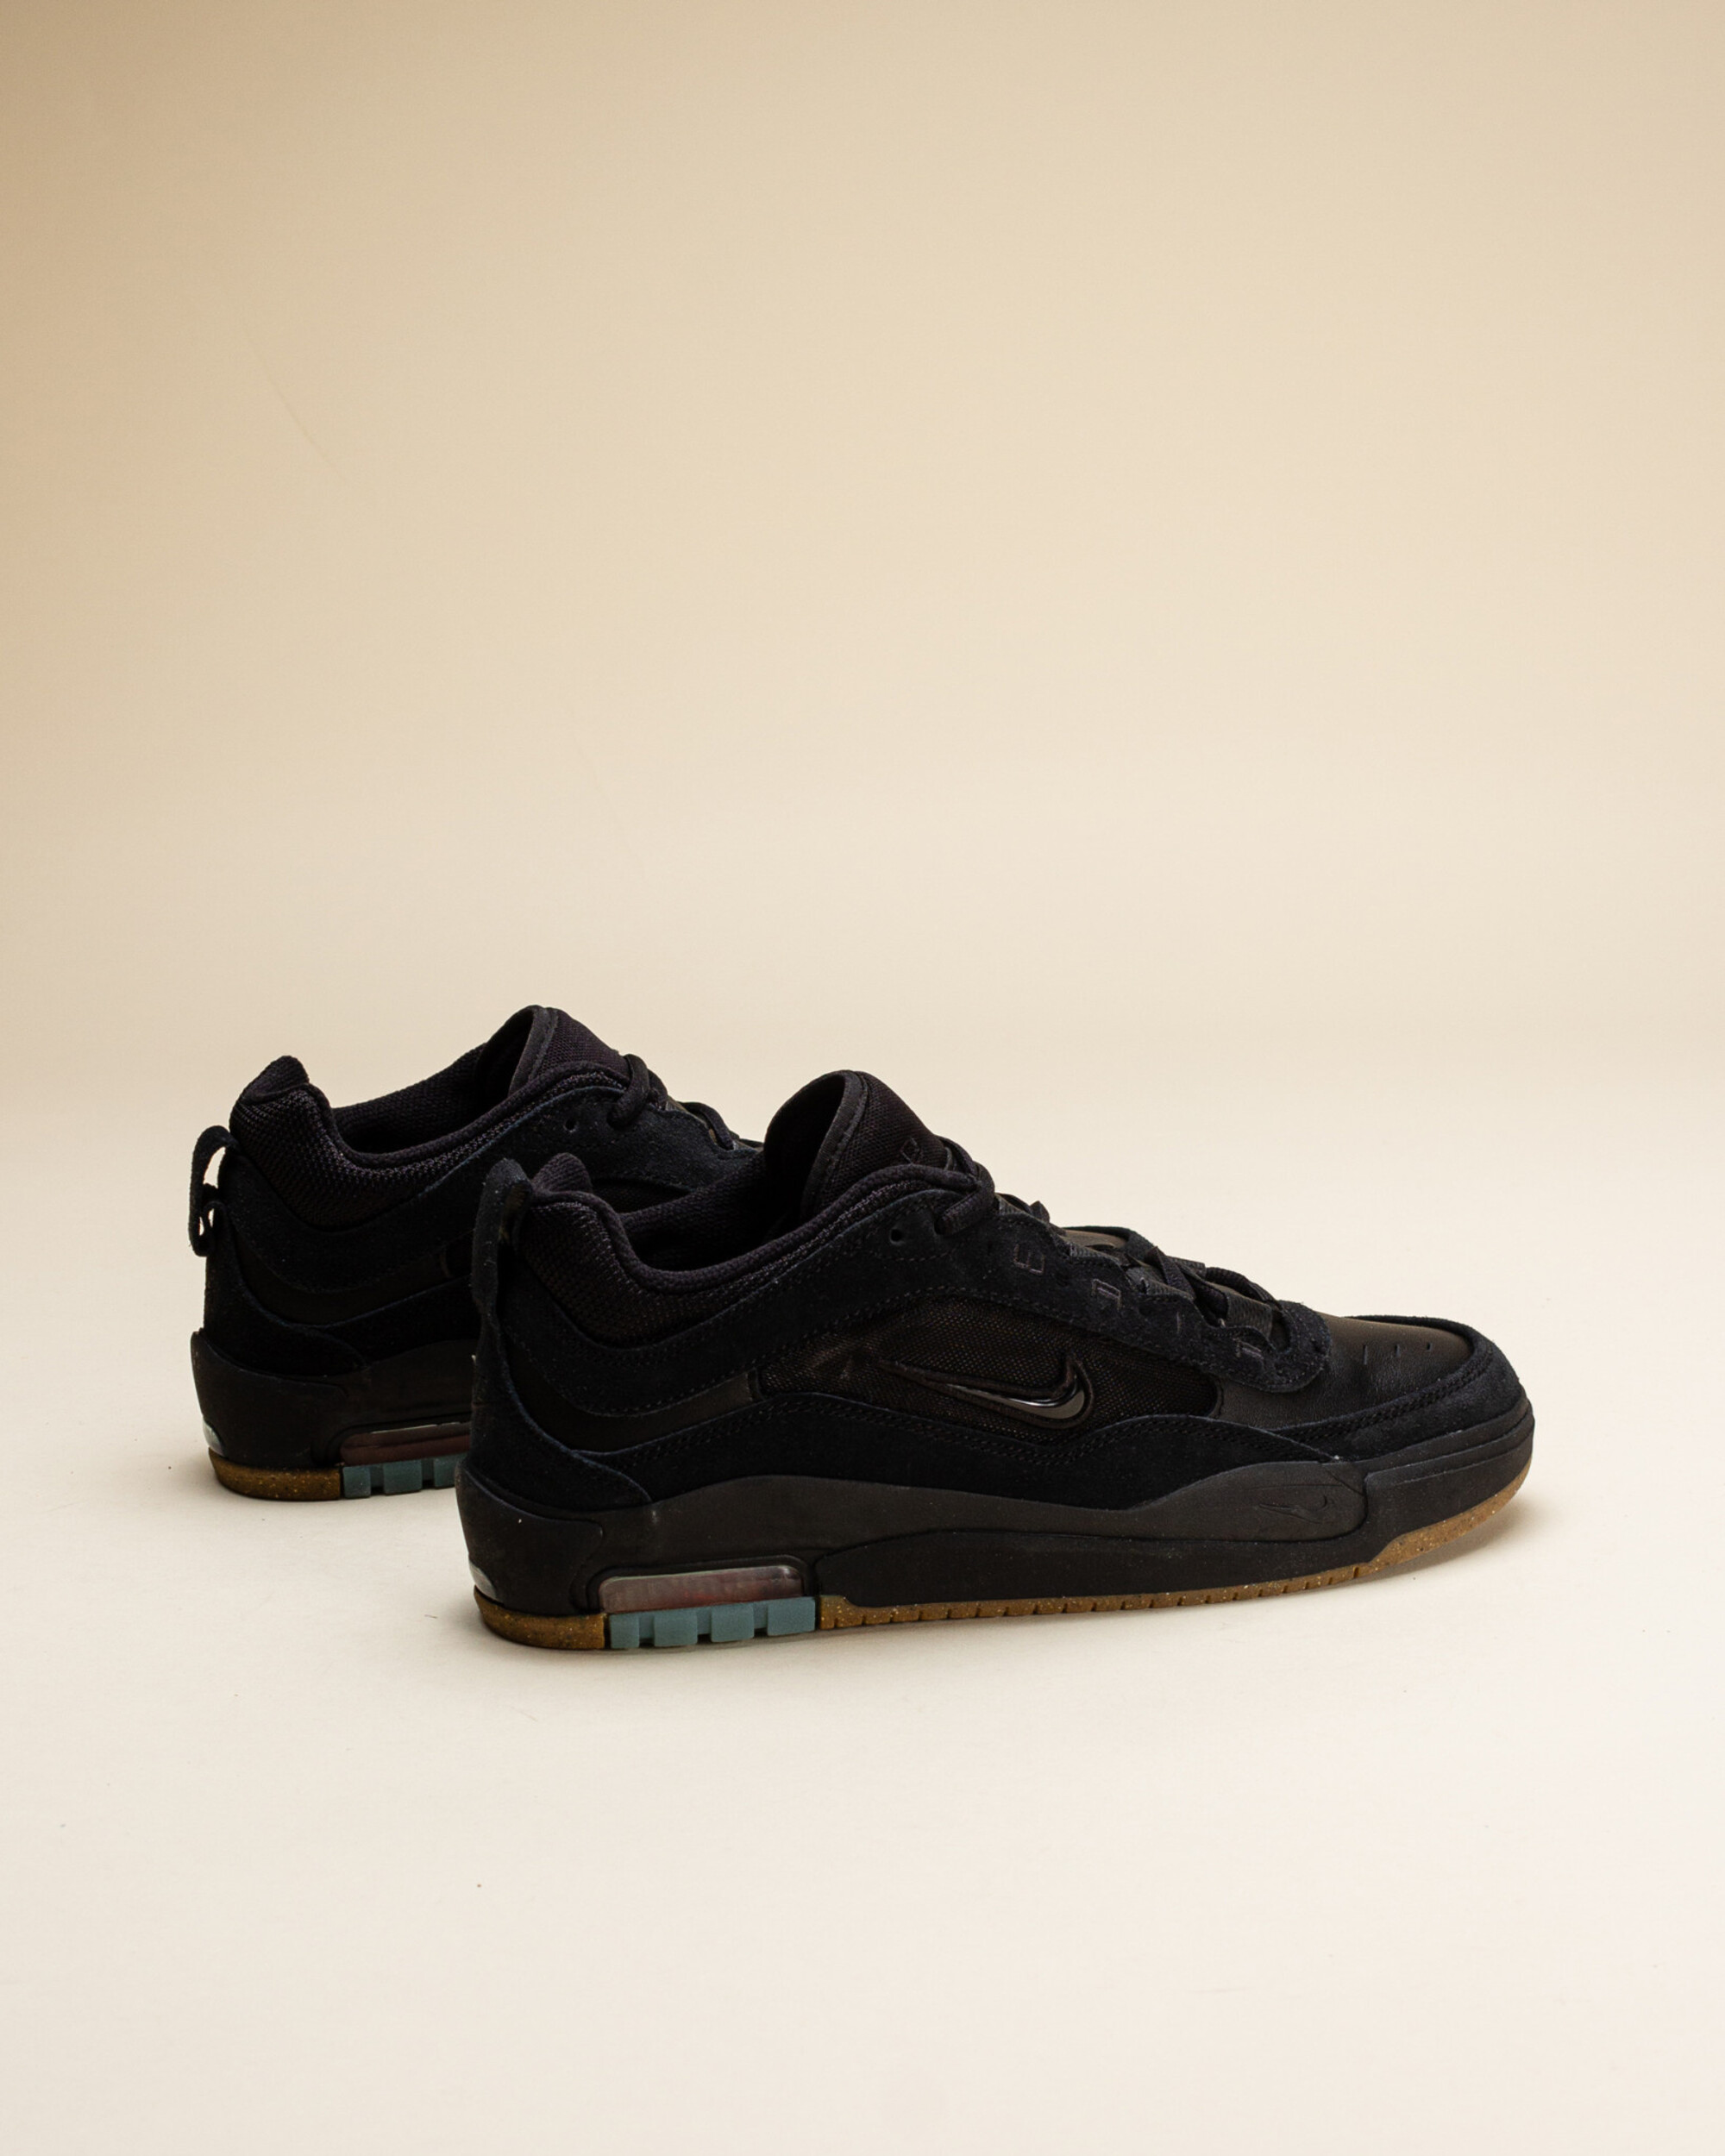 Nike SB Air Max Ishod - Black/Anthracite Black